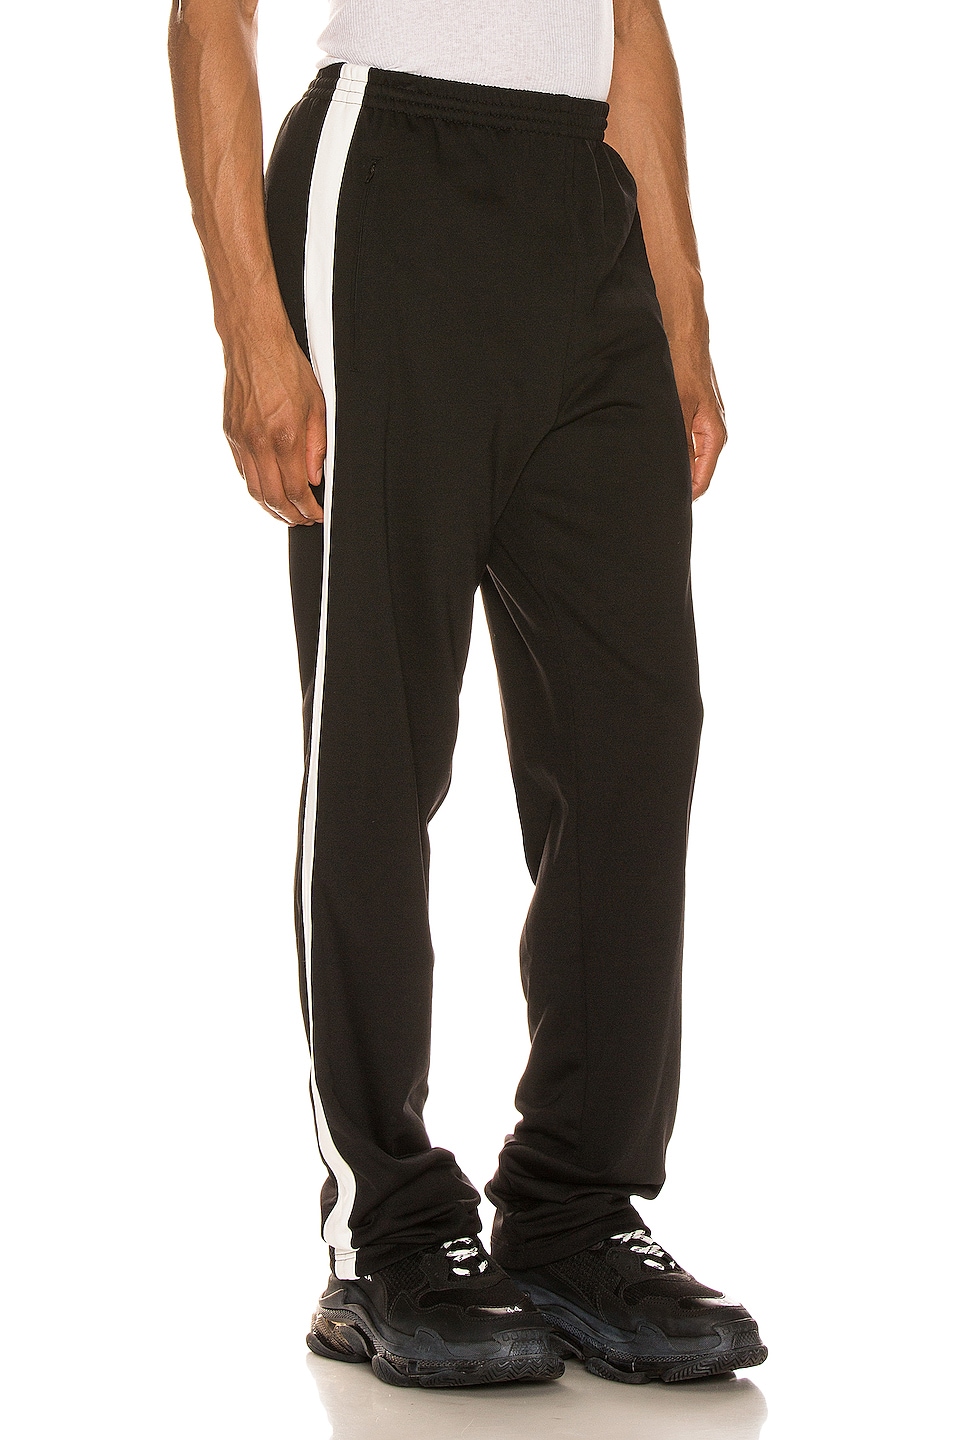 Balenciaga Tracksuit Pants in Black & White | FWRD